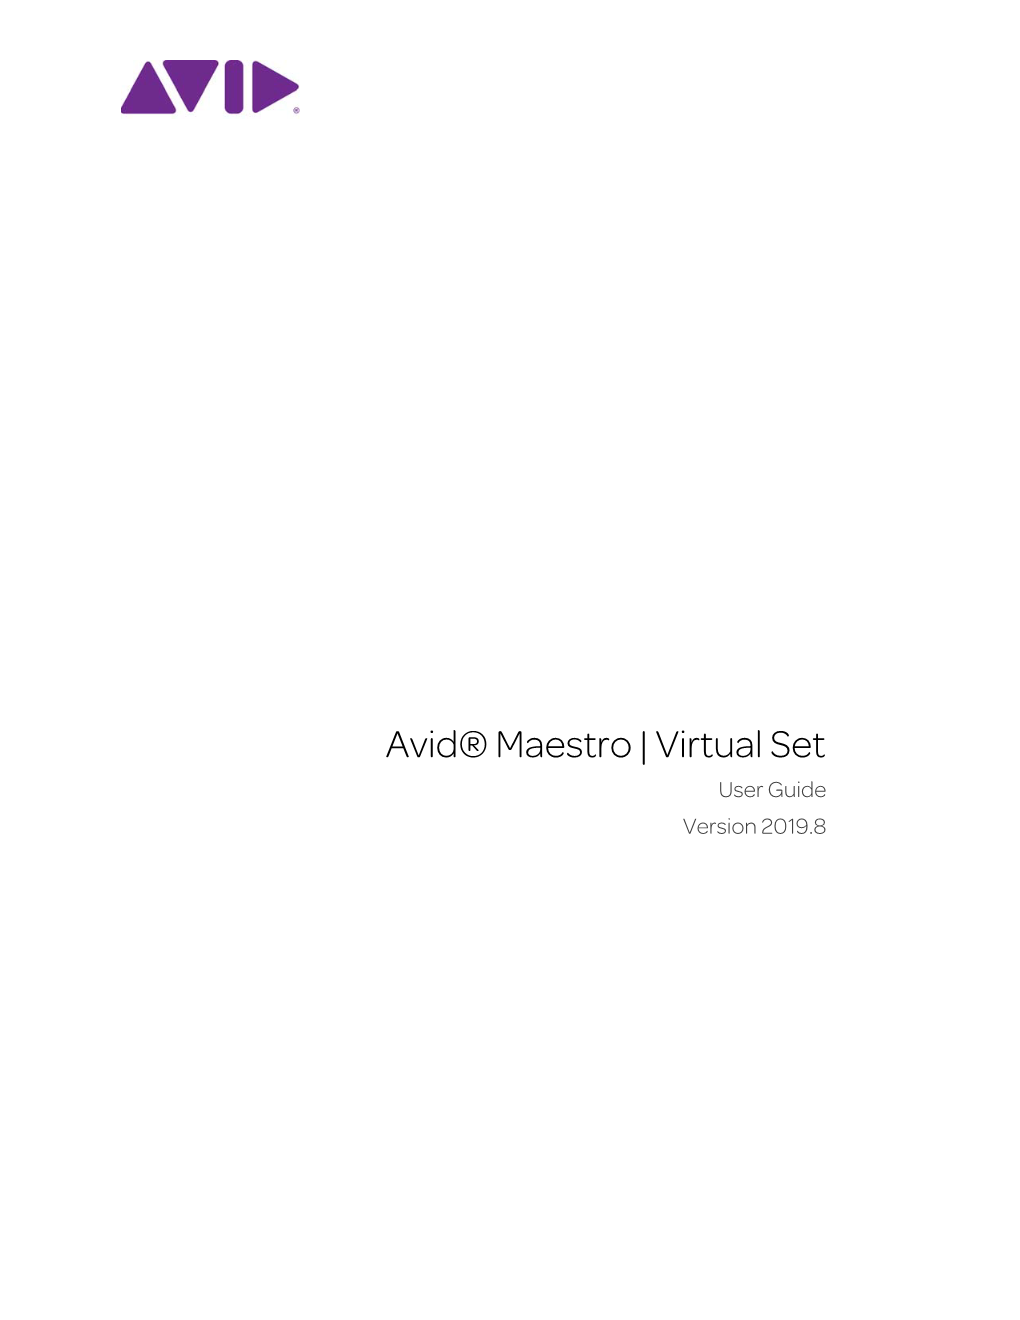 Avid Maestro | Virtual Set User Guide V2019.8